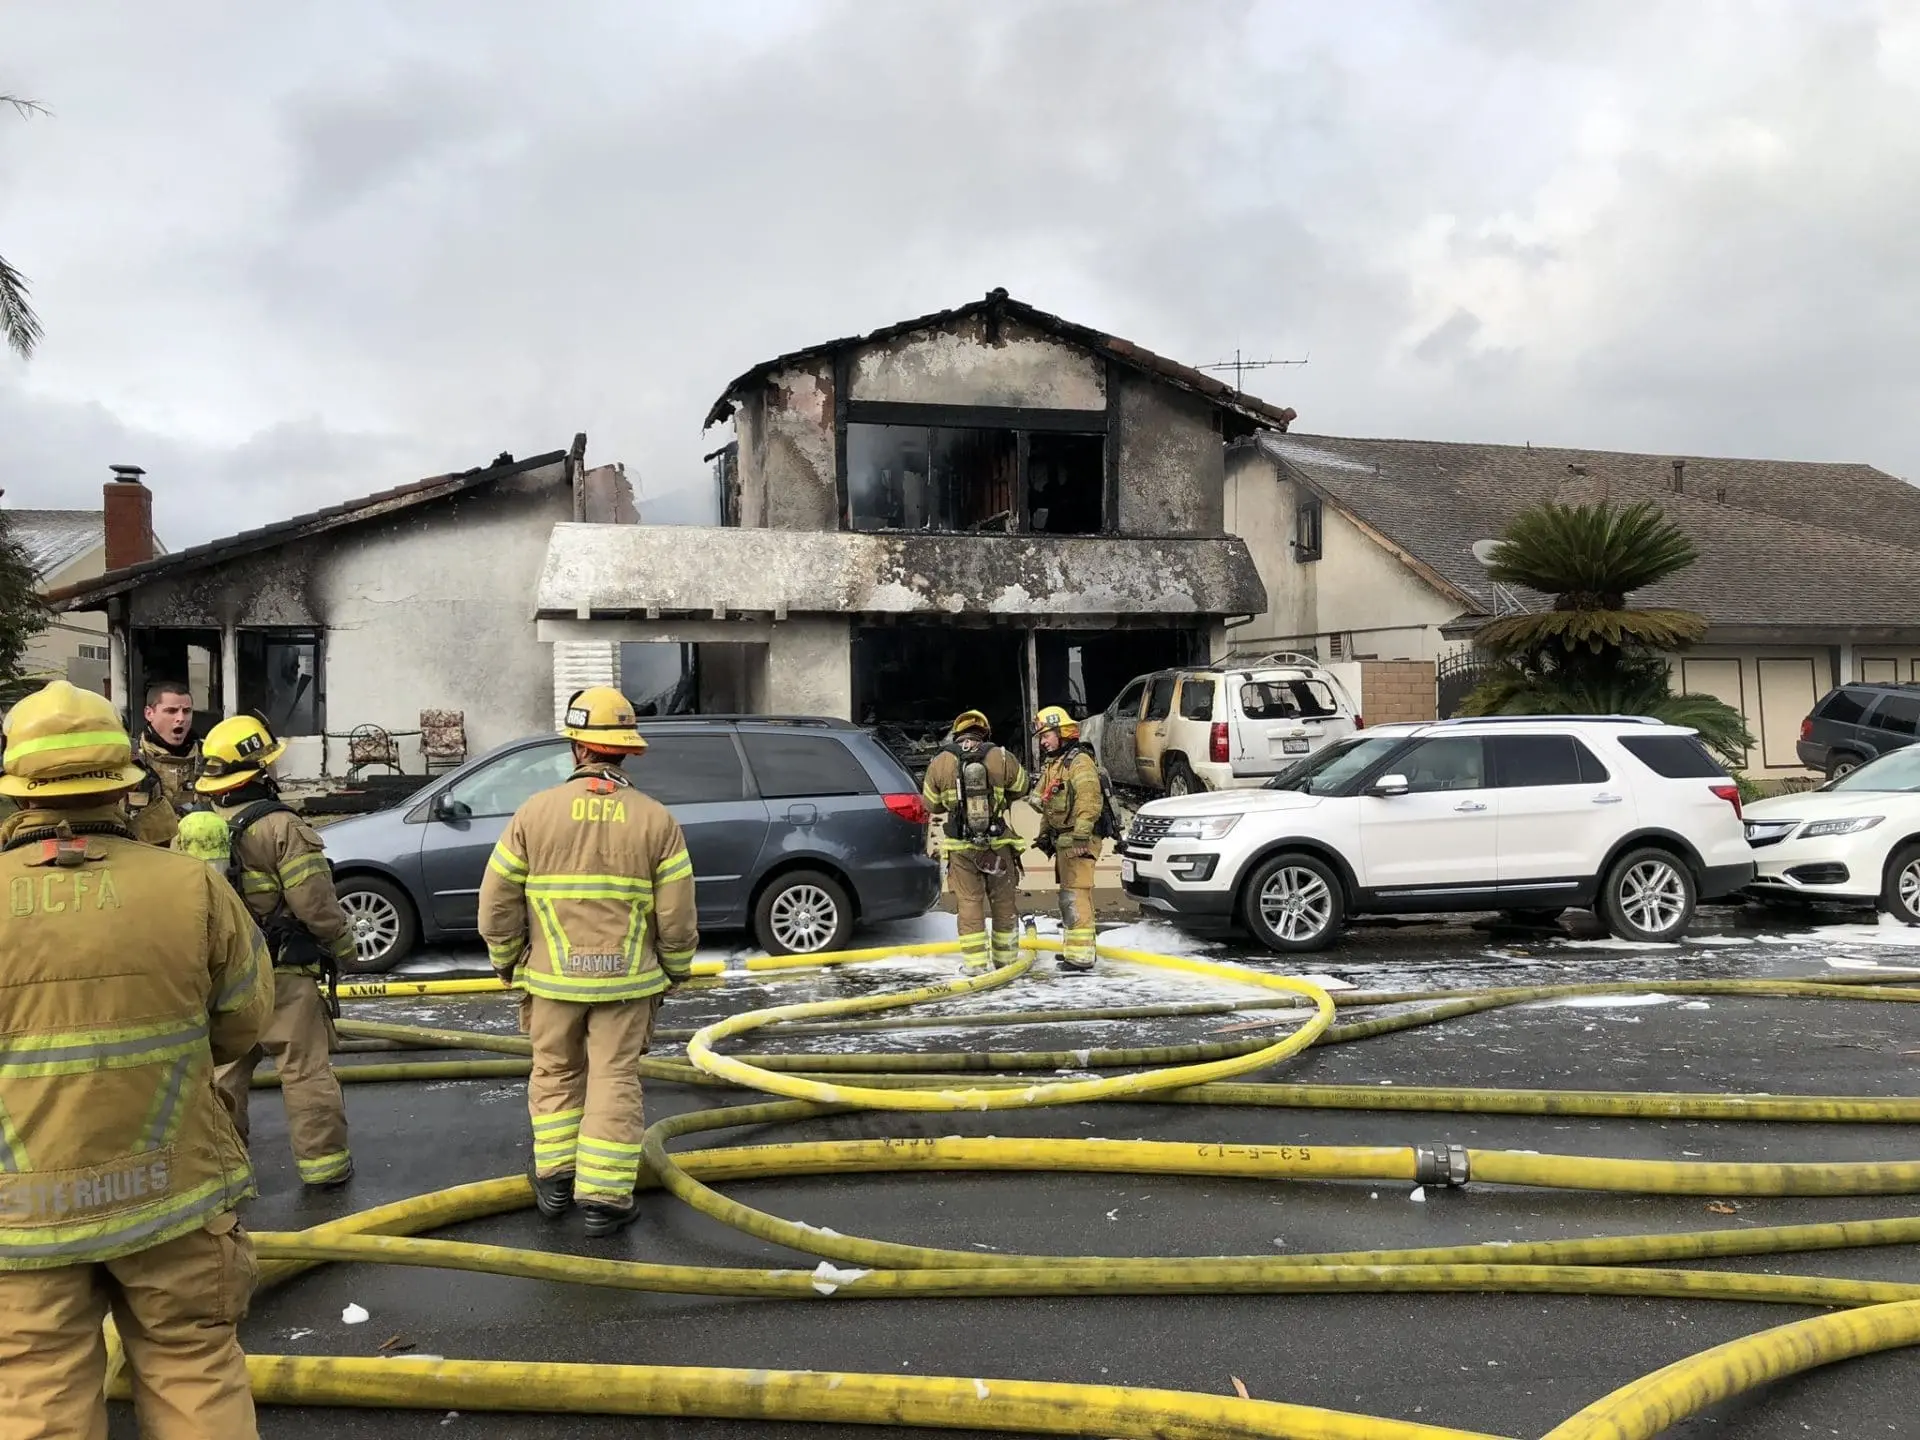 Cessna 414A crashes into a single family house in the suburb of Yorba Linda, California